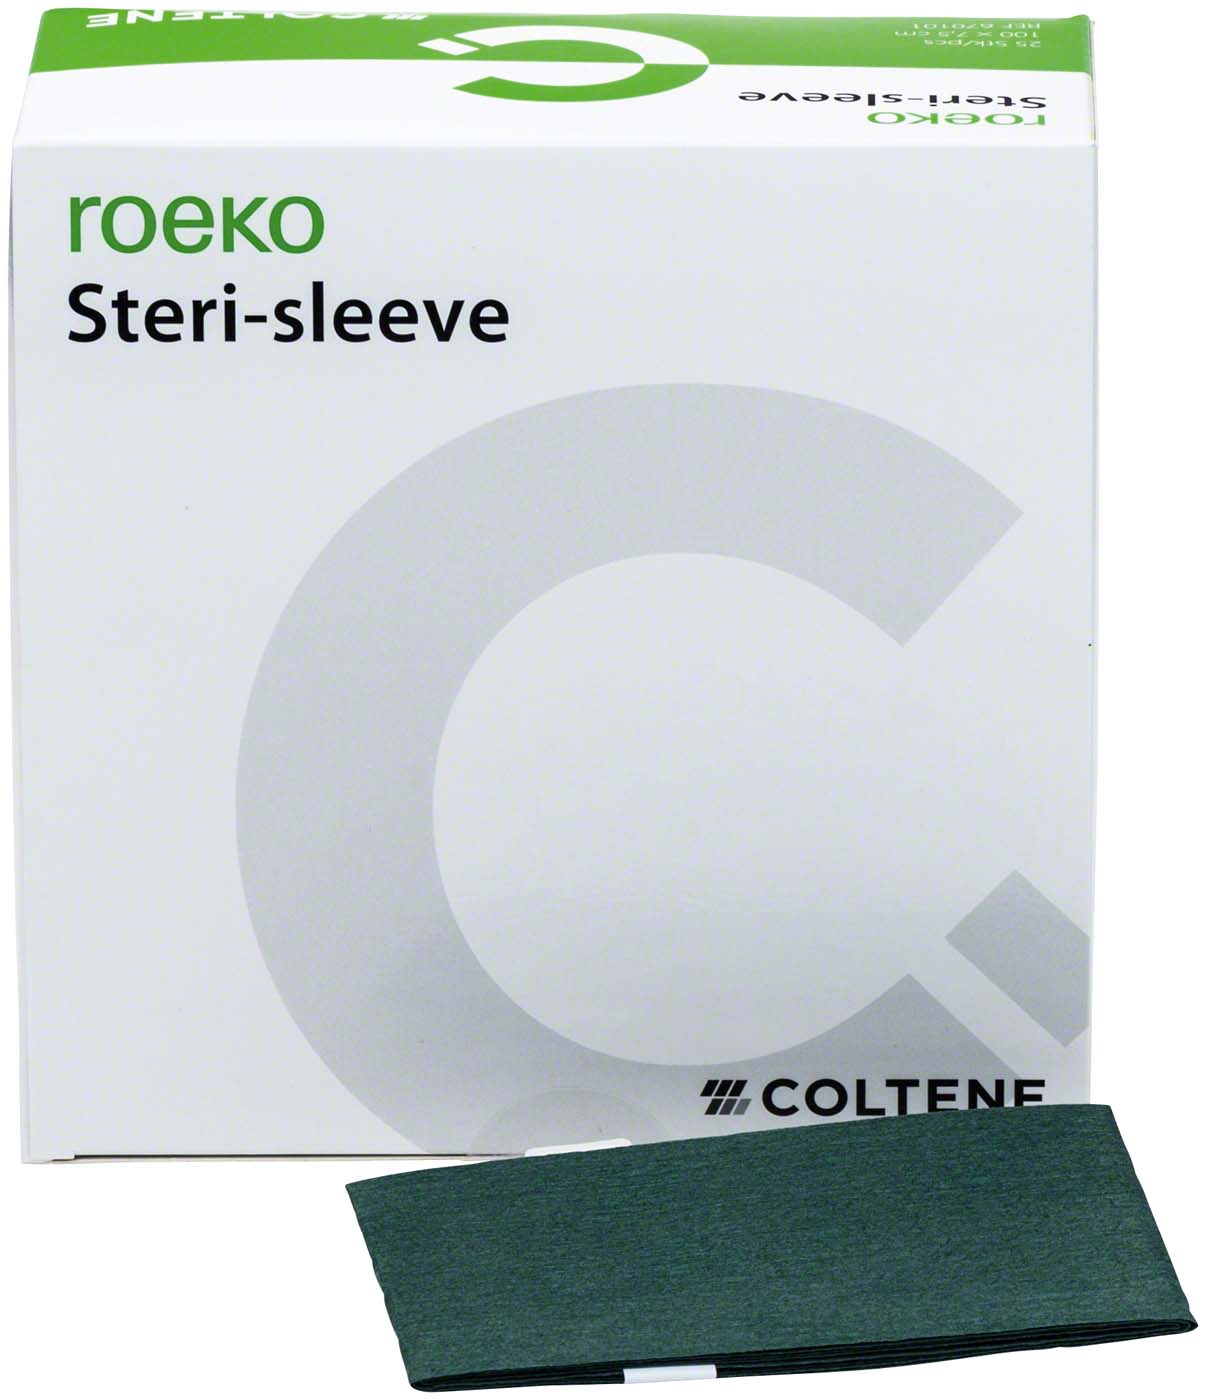 roeko Steri-sleeve COLTENE